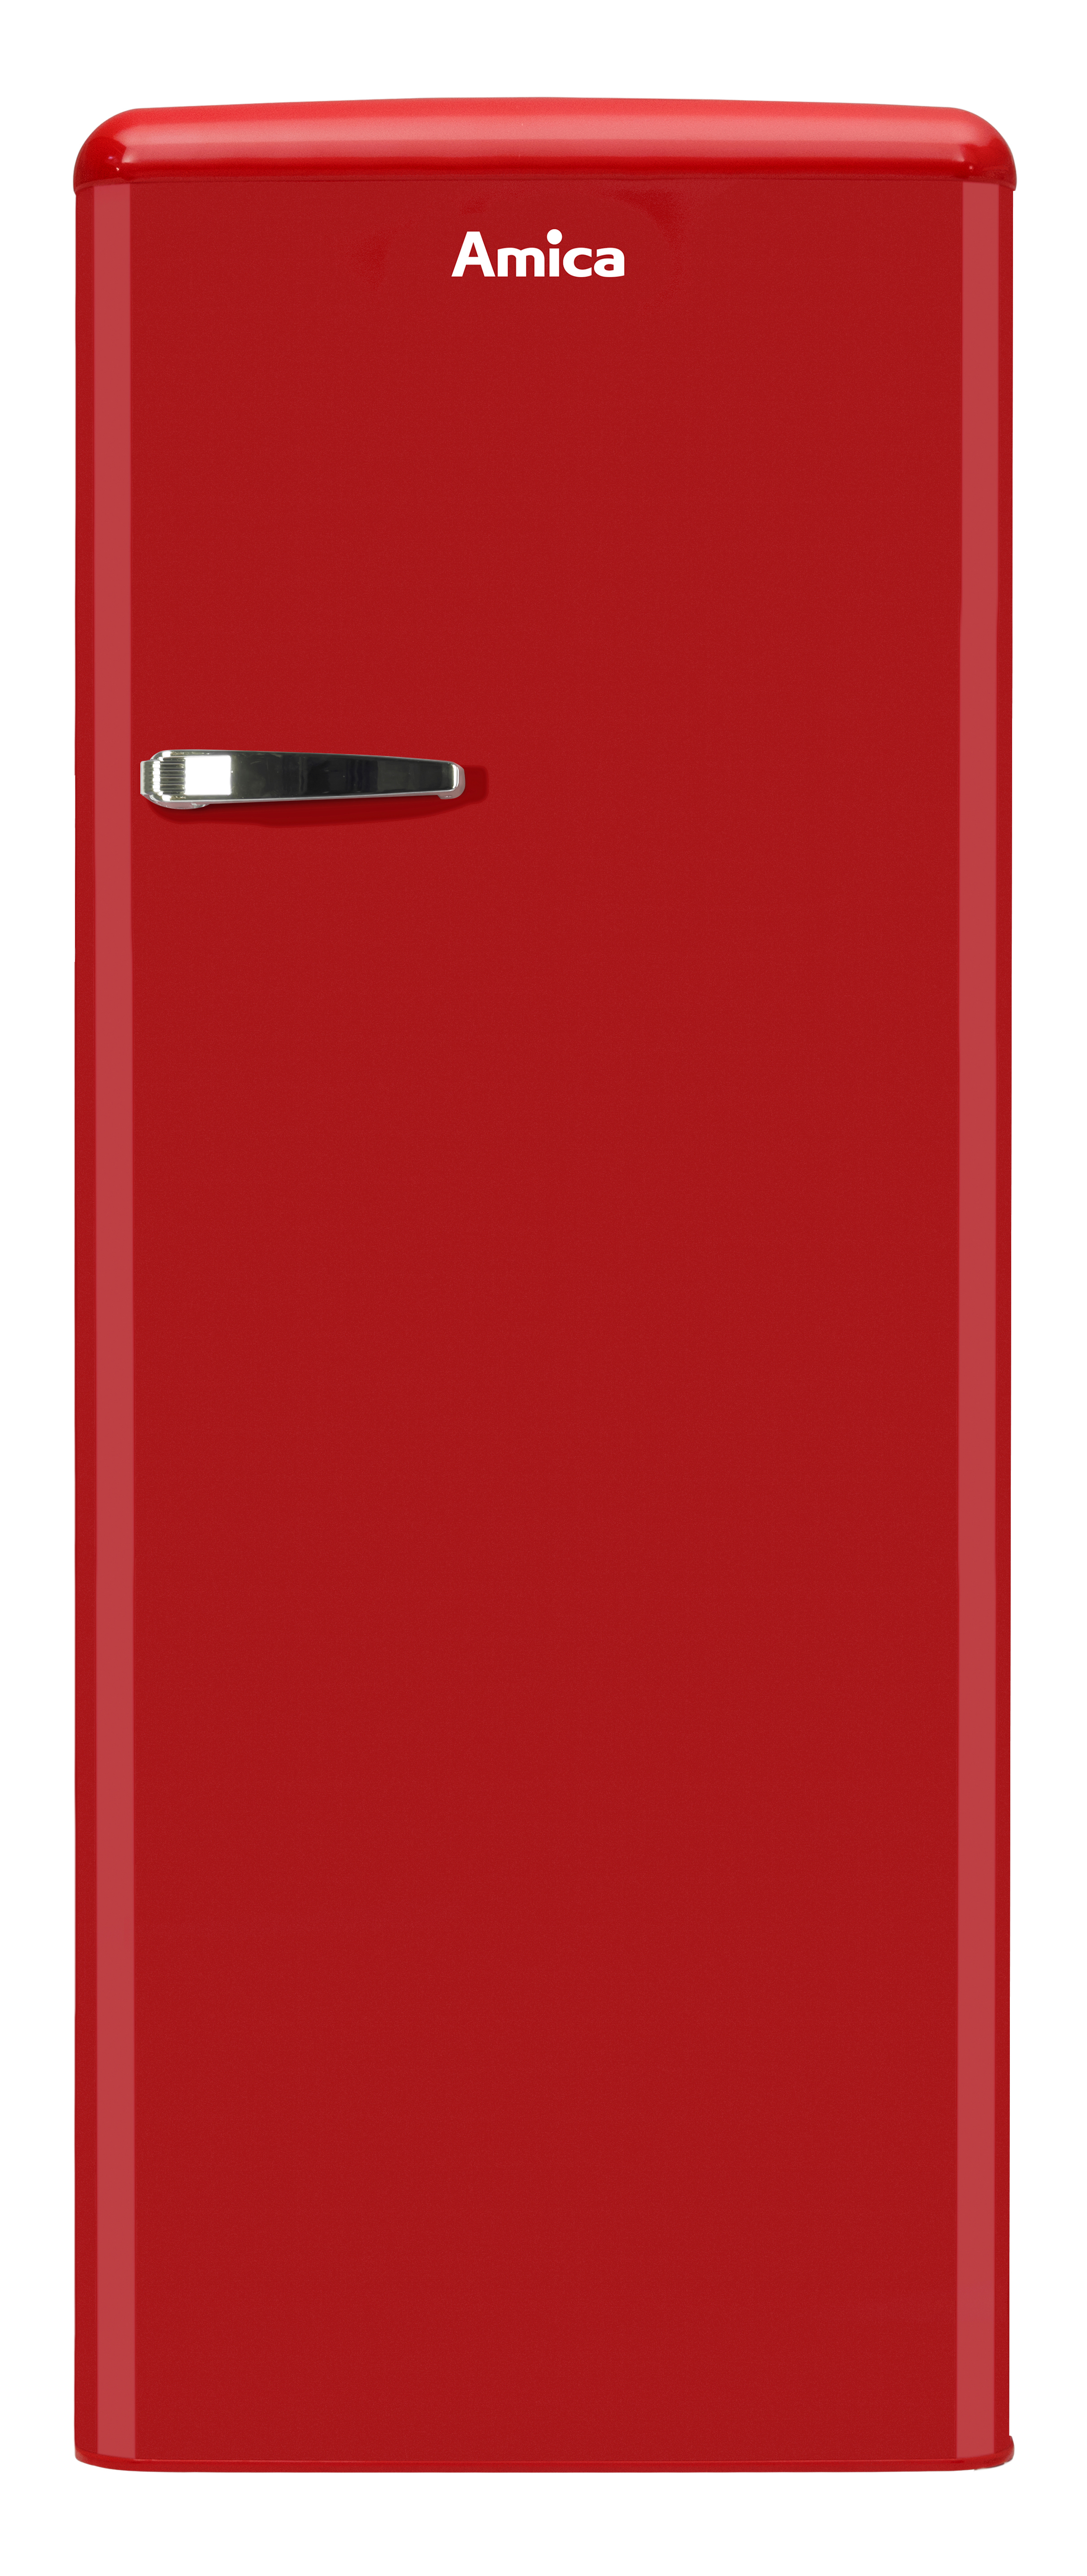 1440 Red) Retro Kühlschrank hoch, AMICA mm 364 R Chili KSR (E, 150 Edition